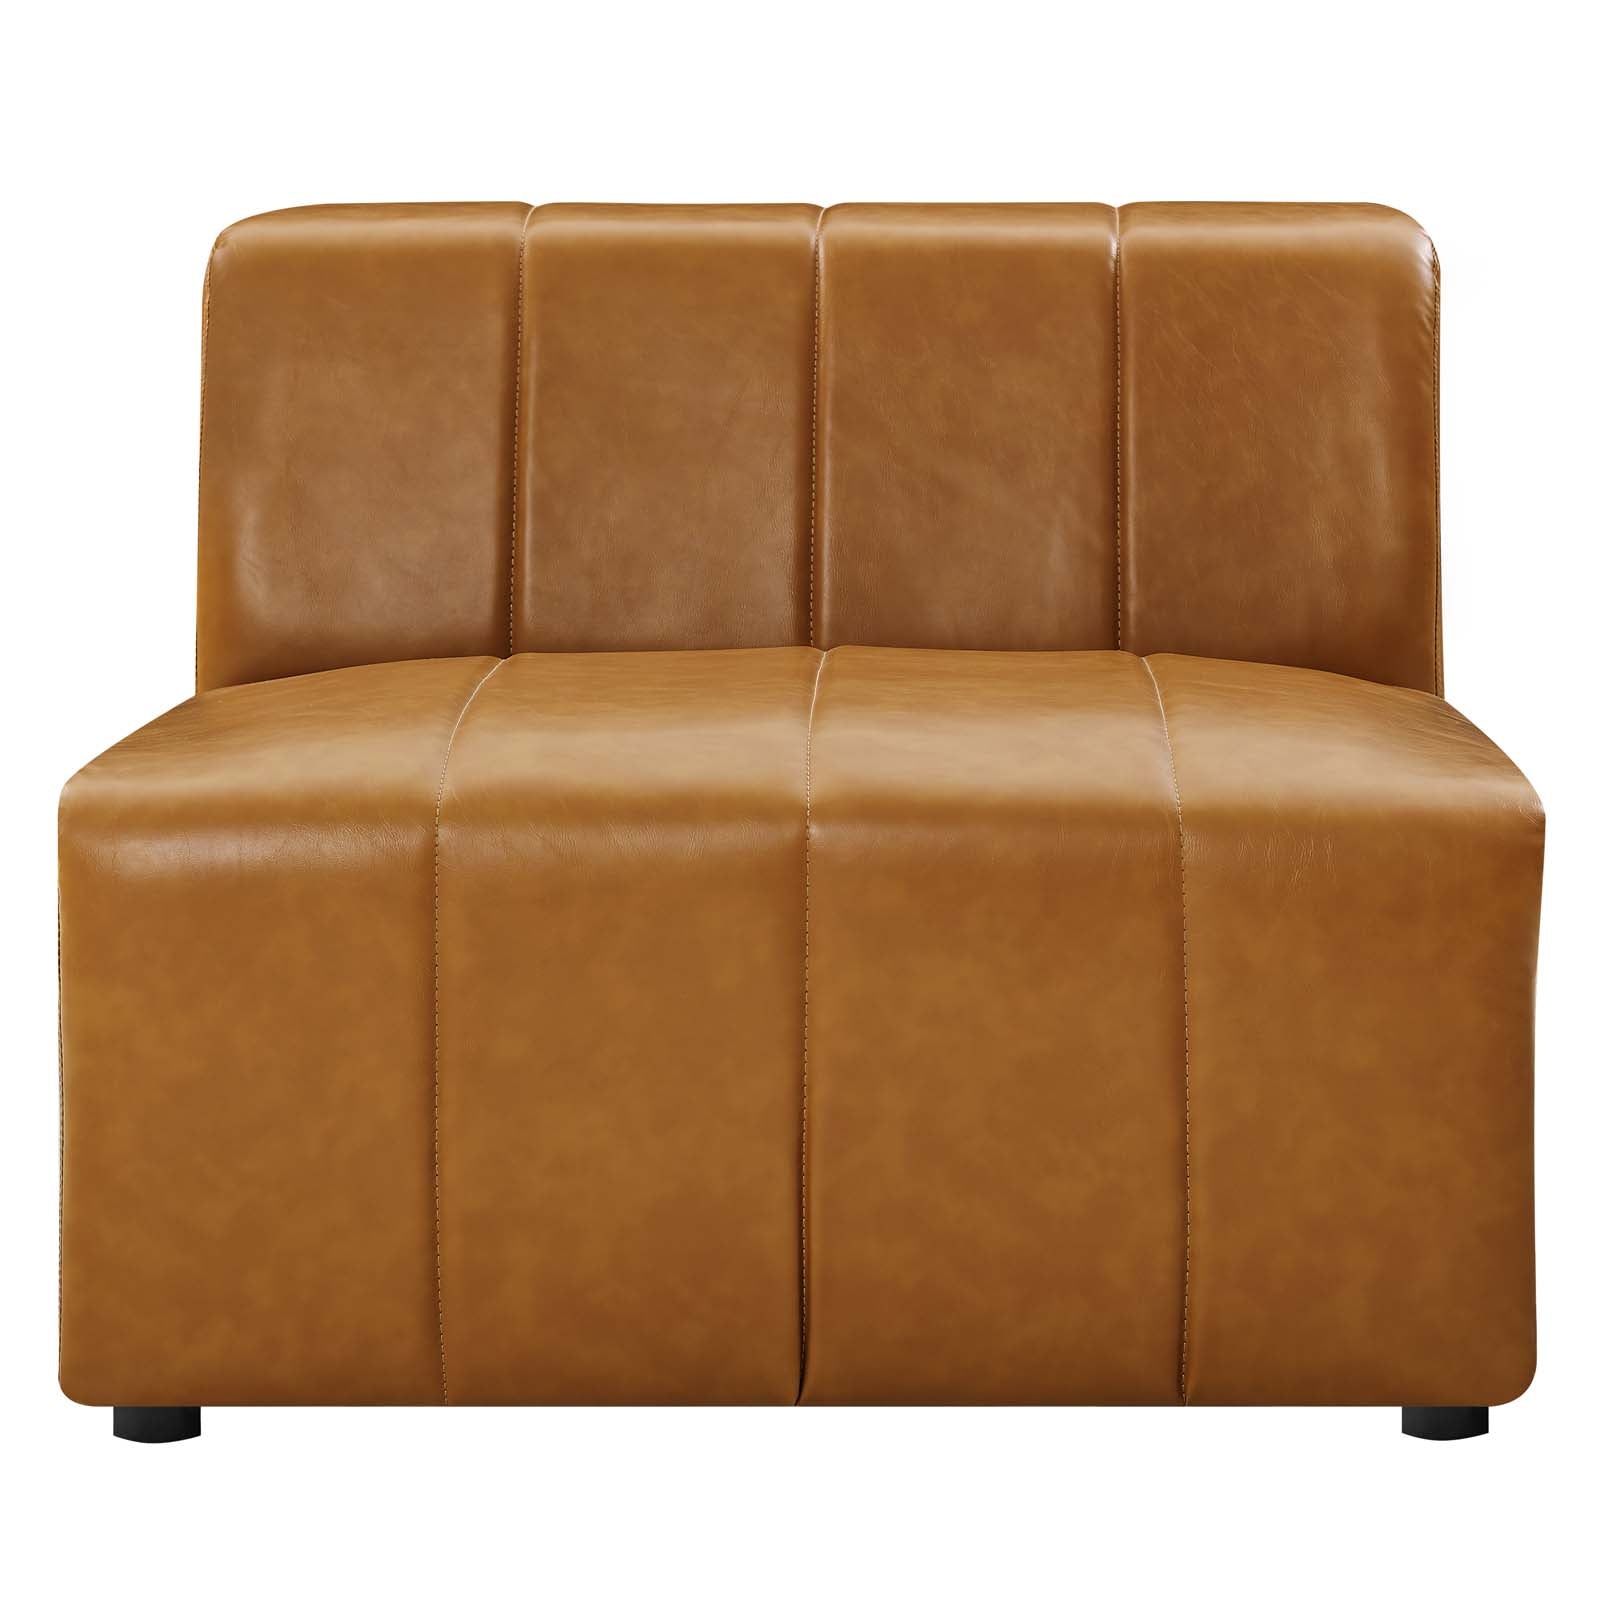 Bartlett Vegan Leather Armless Chair - East Shore Modern Home Furnishings